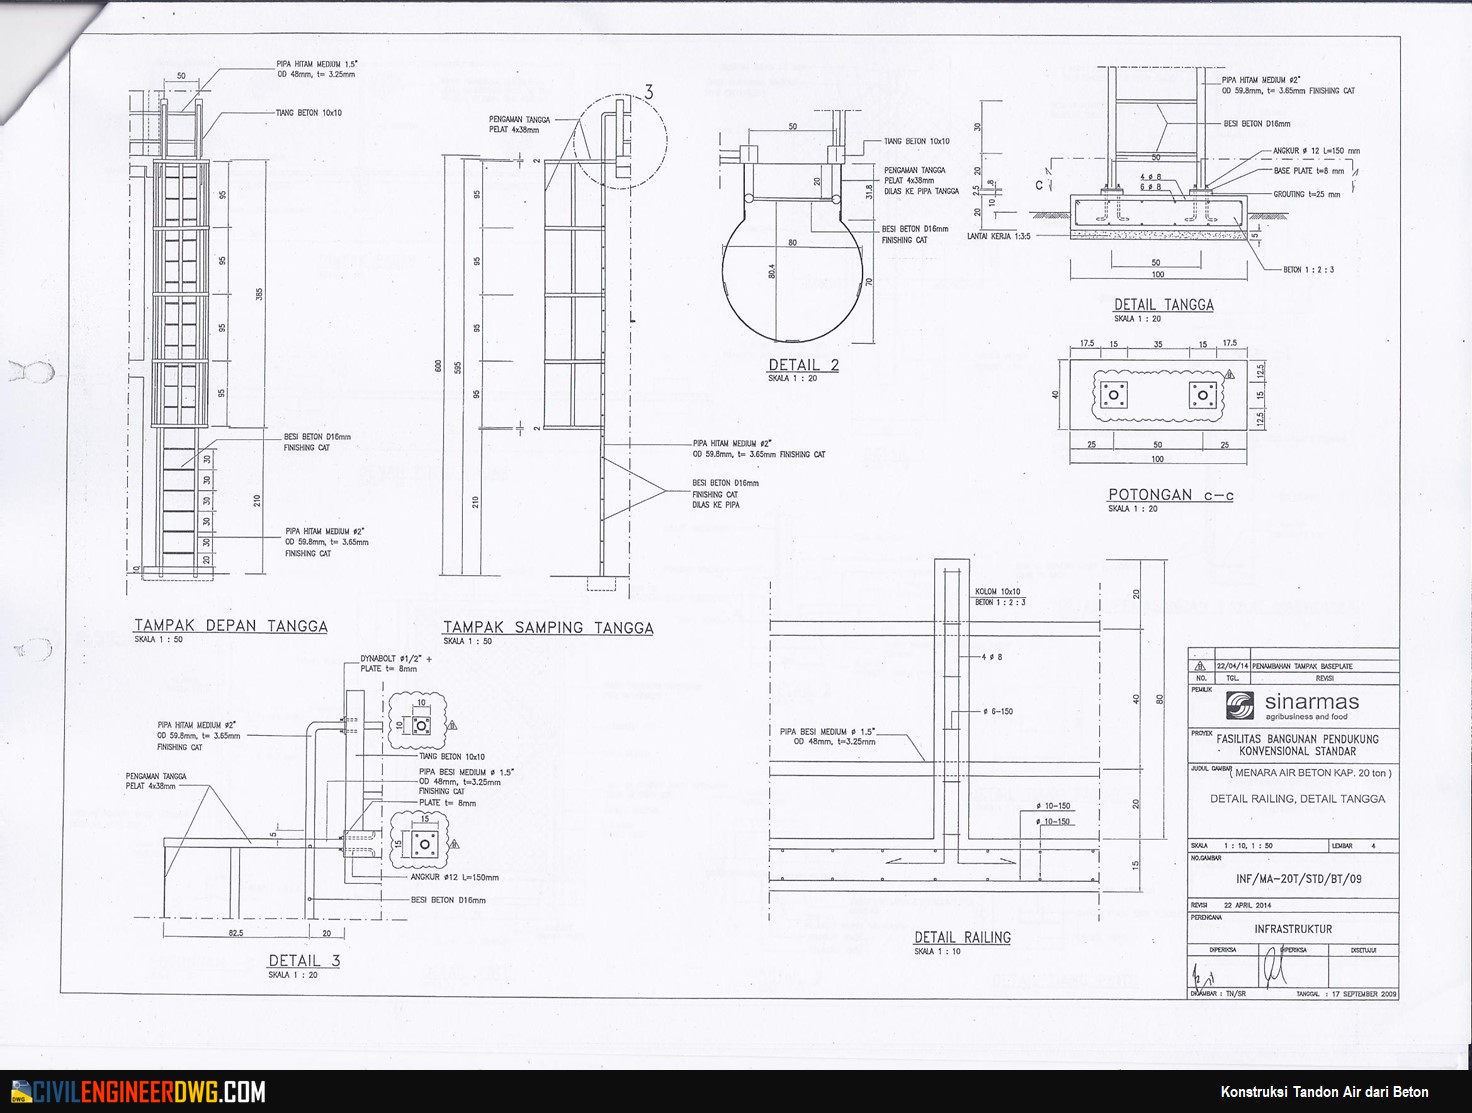 <a href="https://www.civilengineerdwg.com/"><img src="Konstruksi Tandon Air dari Beton.jpg" alt="Konstruksi Tandon Air dari Beton: Kapasitas 1 Ton, Gambar dan Estimasi PT SMART Tbk"></a>